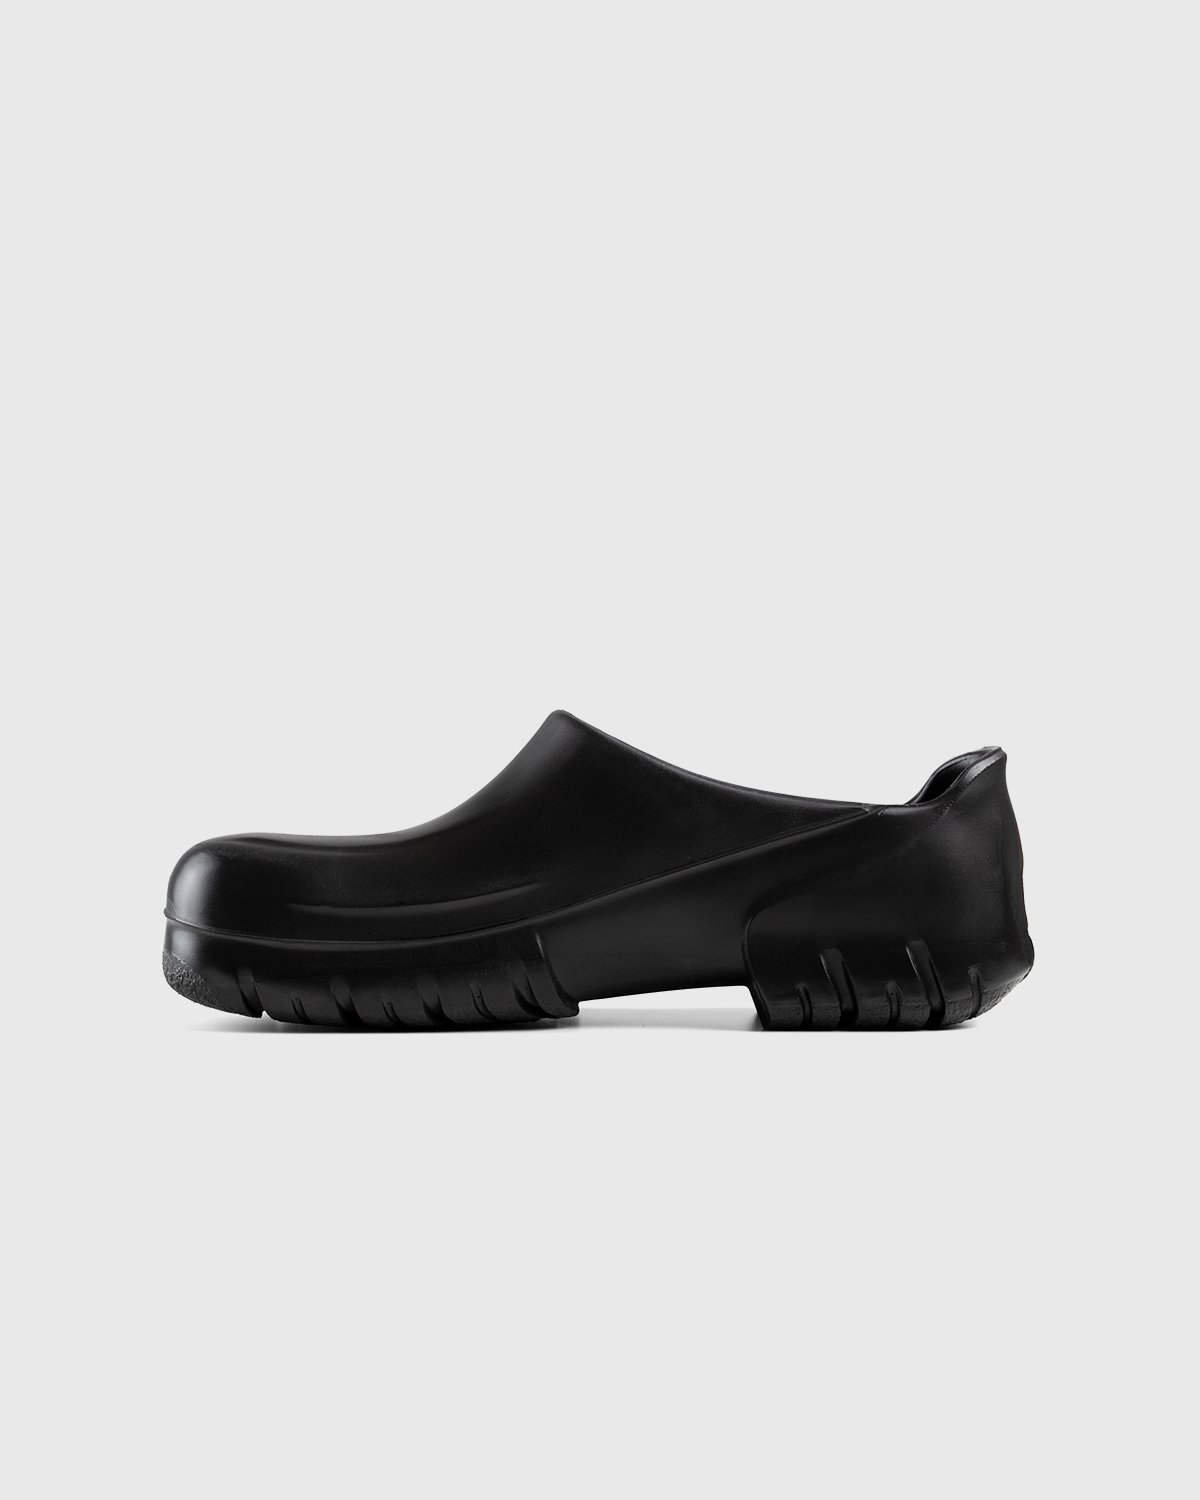 Birkenstock x Ader Error - A630 Black - Footwear - Black - Image 2